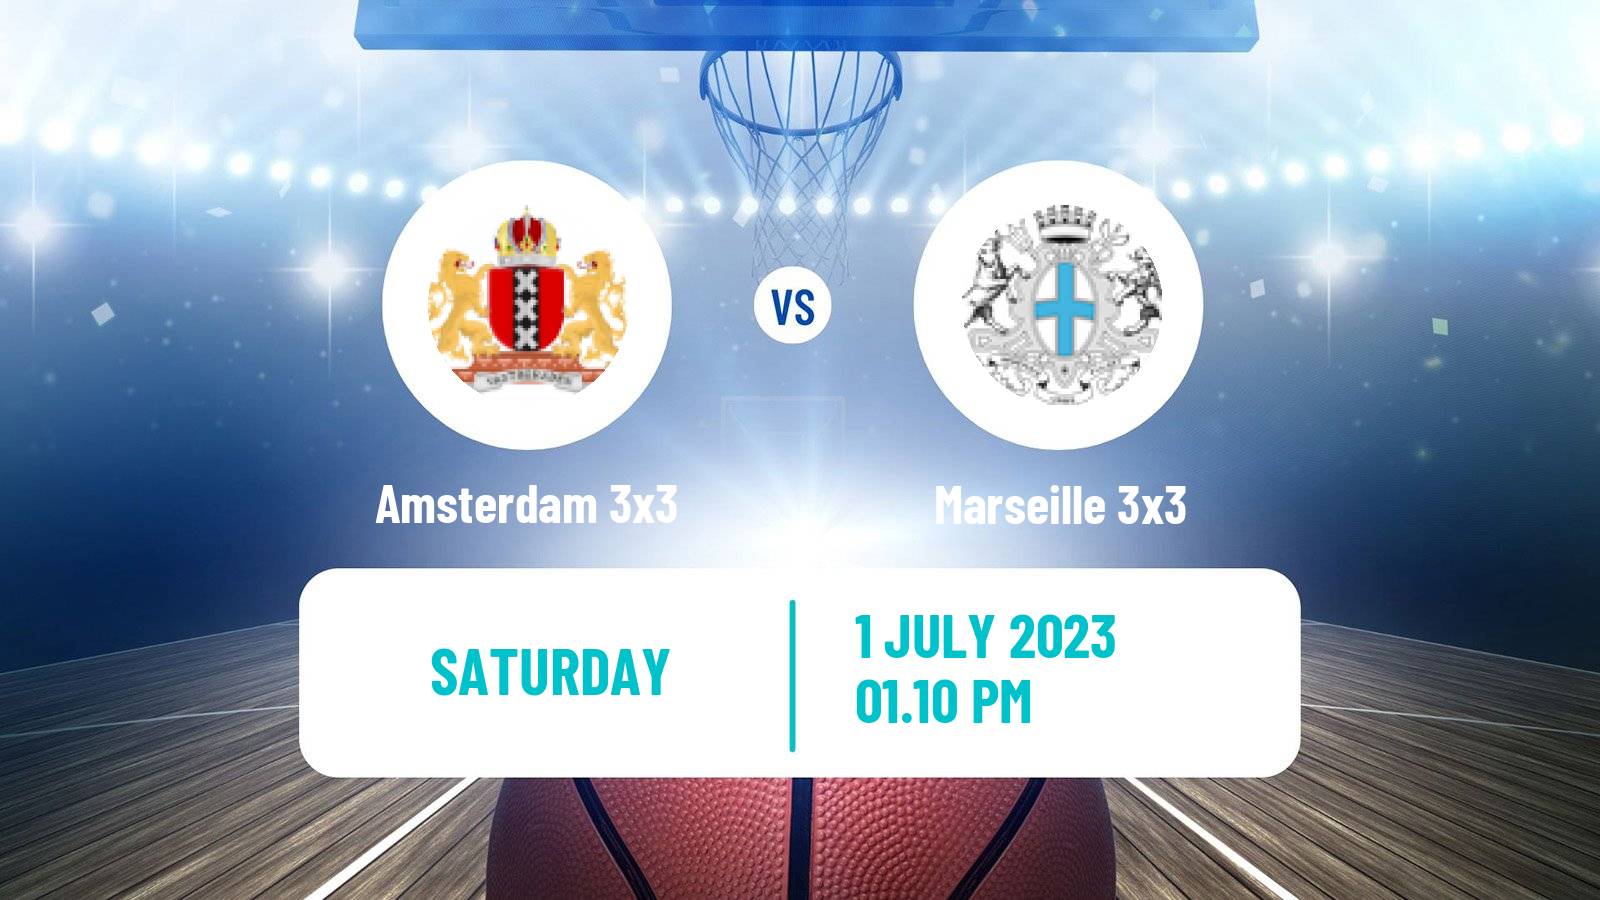 Basketball World Tour Marseille 3x3 Amsterdam 3x3 - Marseille 3x3